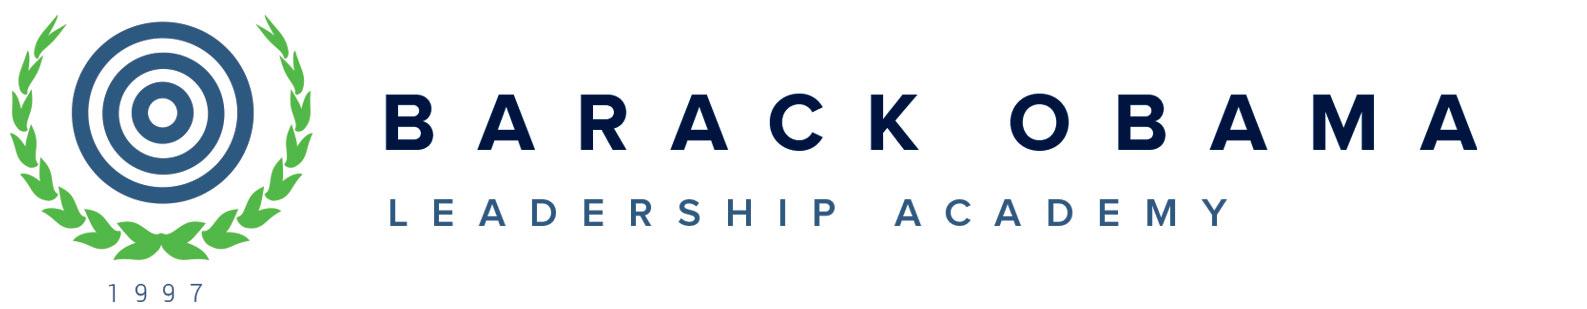 Barack Obama Leadership Academy